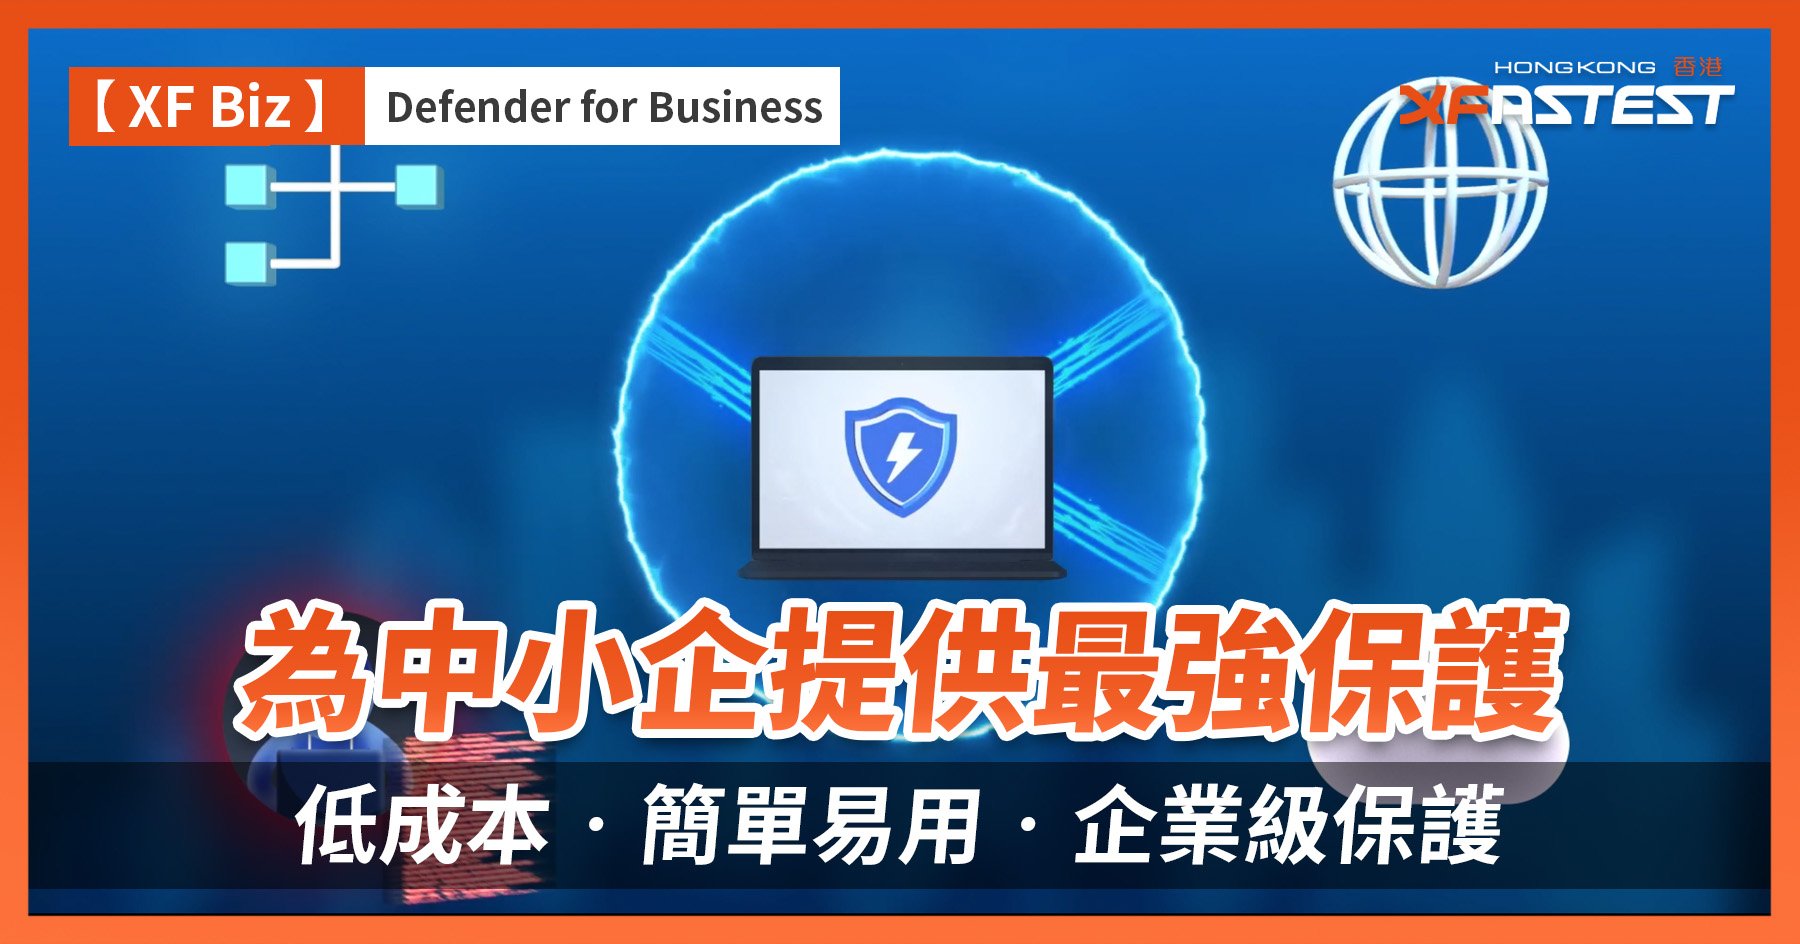 中小企业最佳保护方案：Microsoft Defender for Business，获得低成本、易使用、企业级保护 - EVLIT